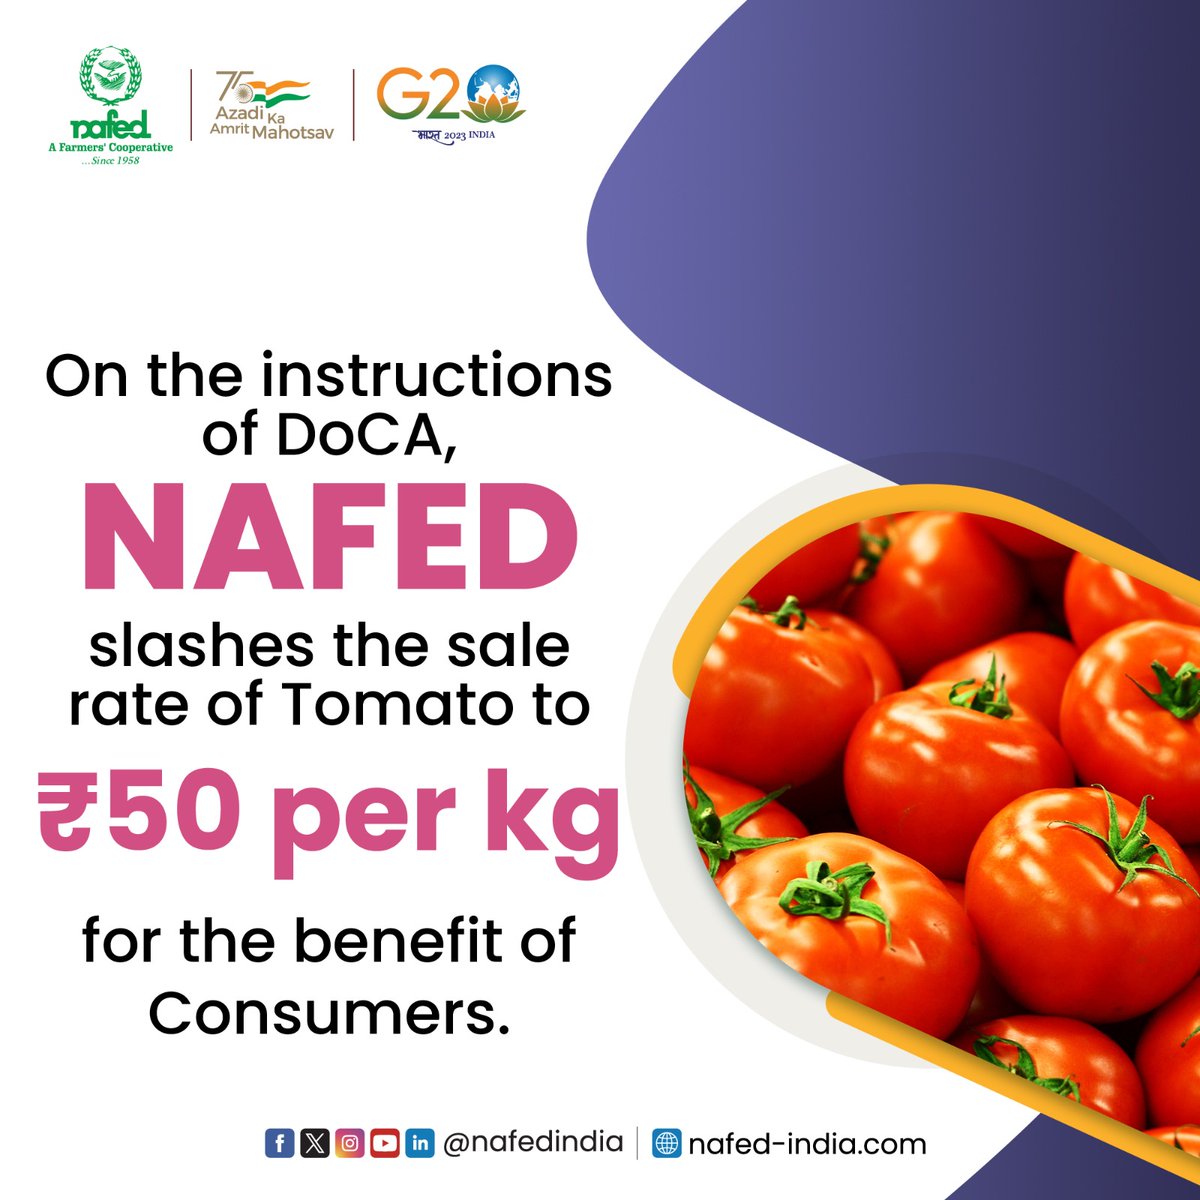 #NAFED's newest offering
#TomatoPrice #TomatoPriceHike #Tomatoes #tomatoesprice #SahakarSeSamriddhi #cooperativesociety #tomatoinflation #inflation 
@PMOIndia @nstomar @AmitShah @PiyushGoyal @rohitksingh @RiteshIAS @AshwiniKChoubey @RajKSinghIndia @PIB_India @PIB_India